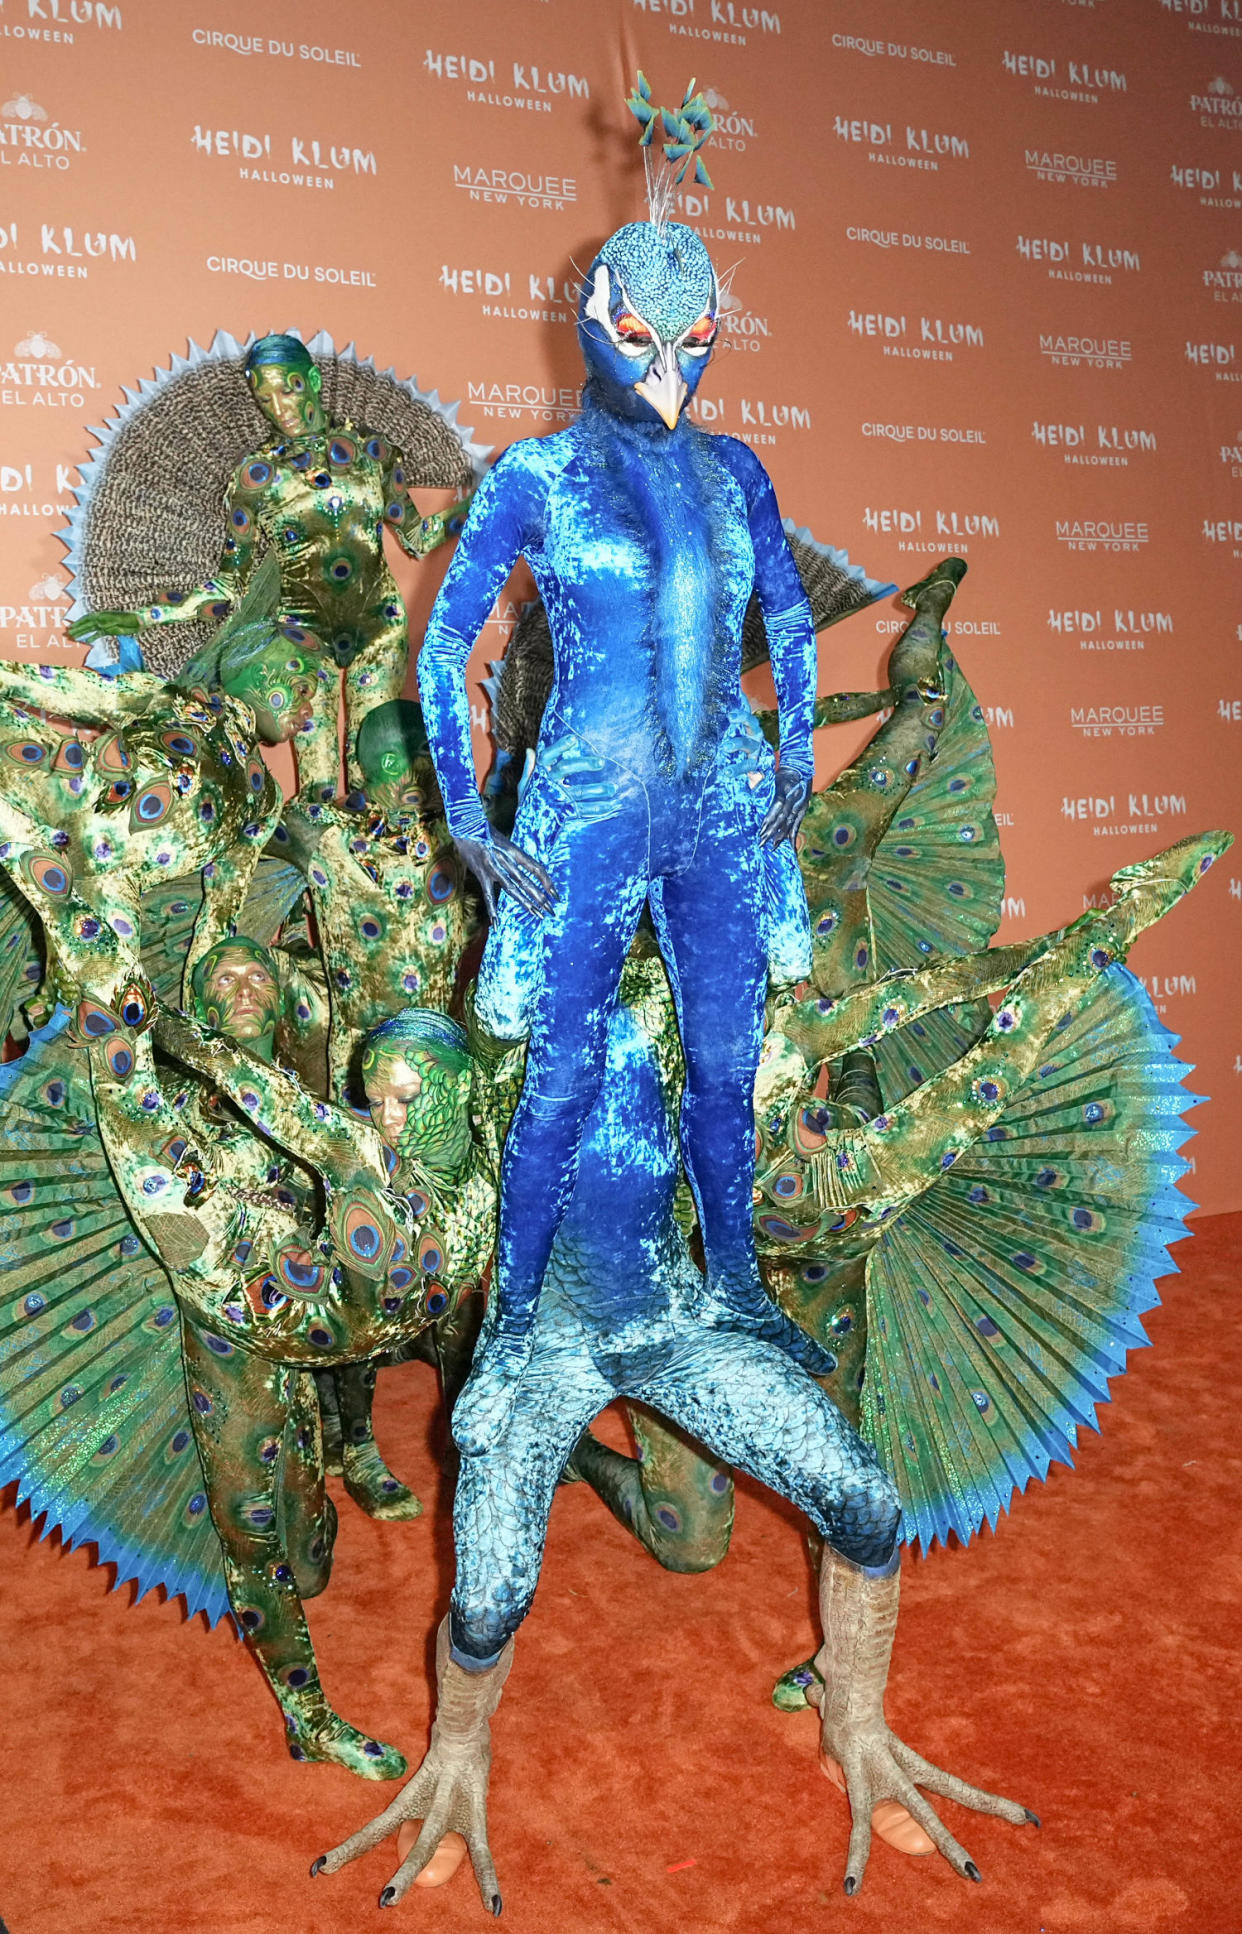 Heidi Klum's wild Halloween costume even has Cirque Du Soleil acrobats